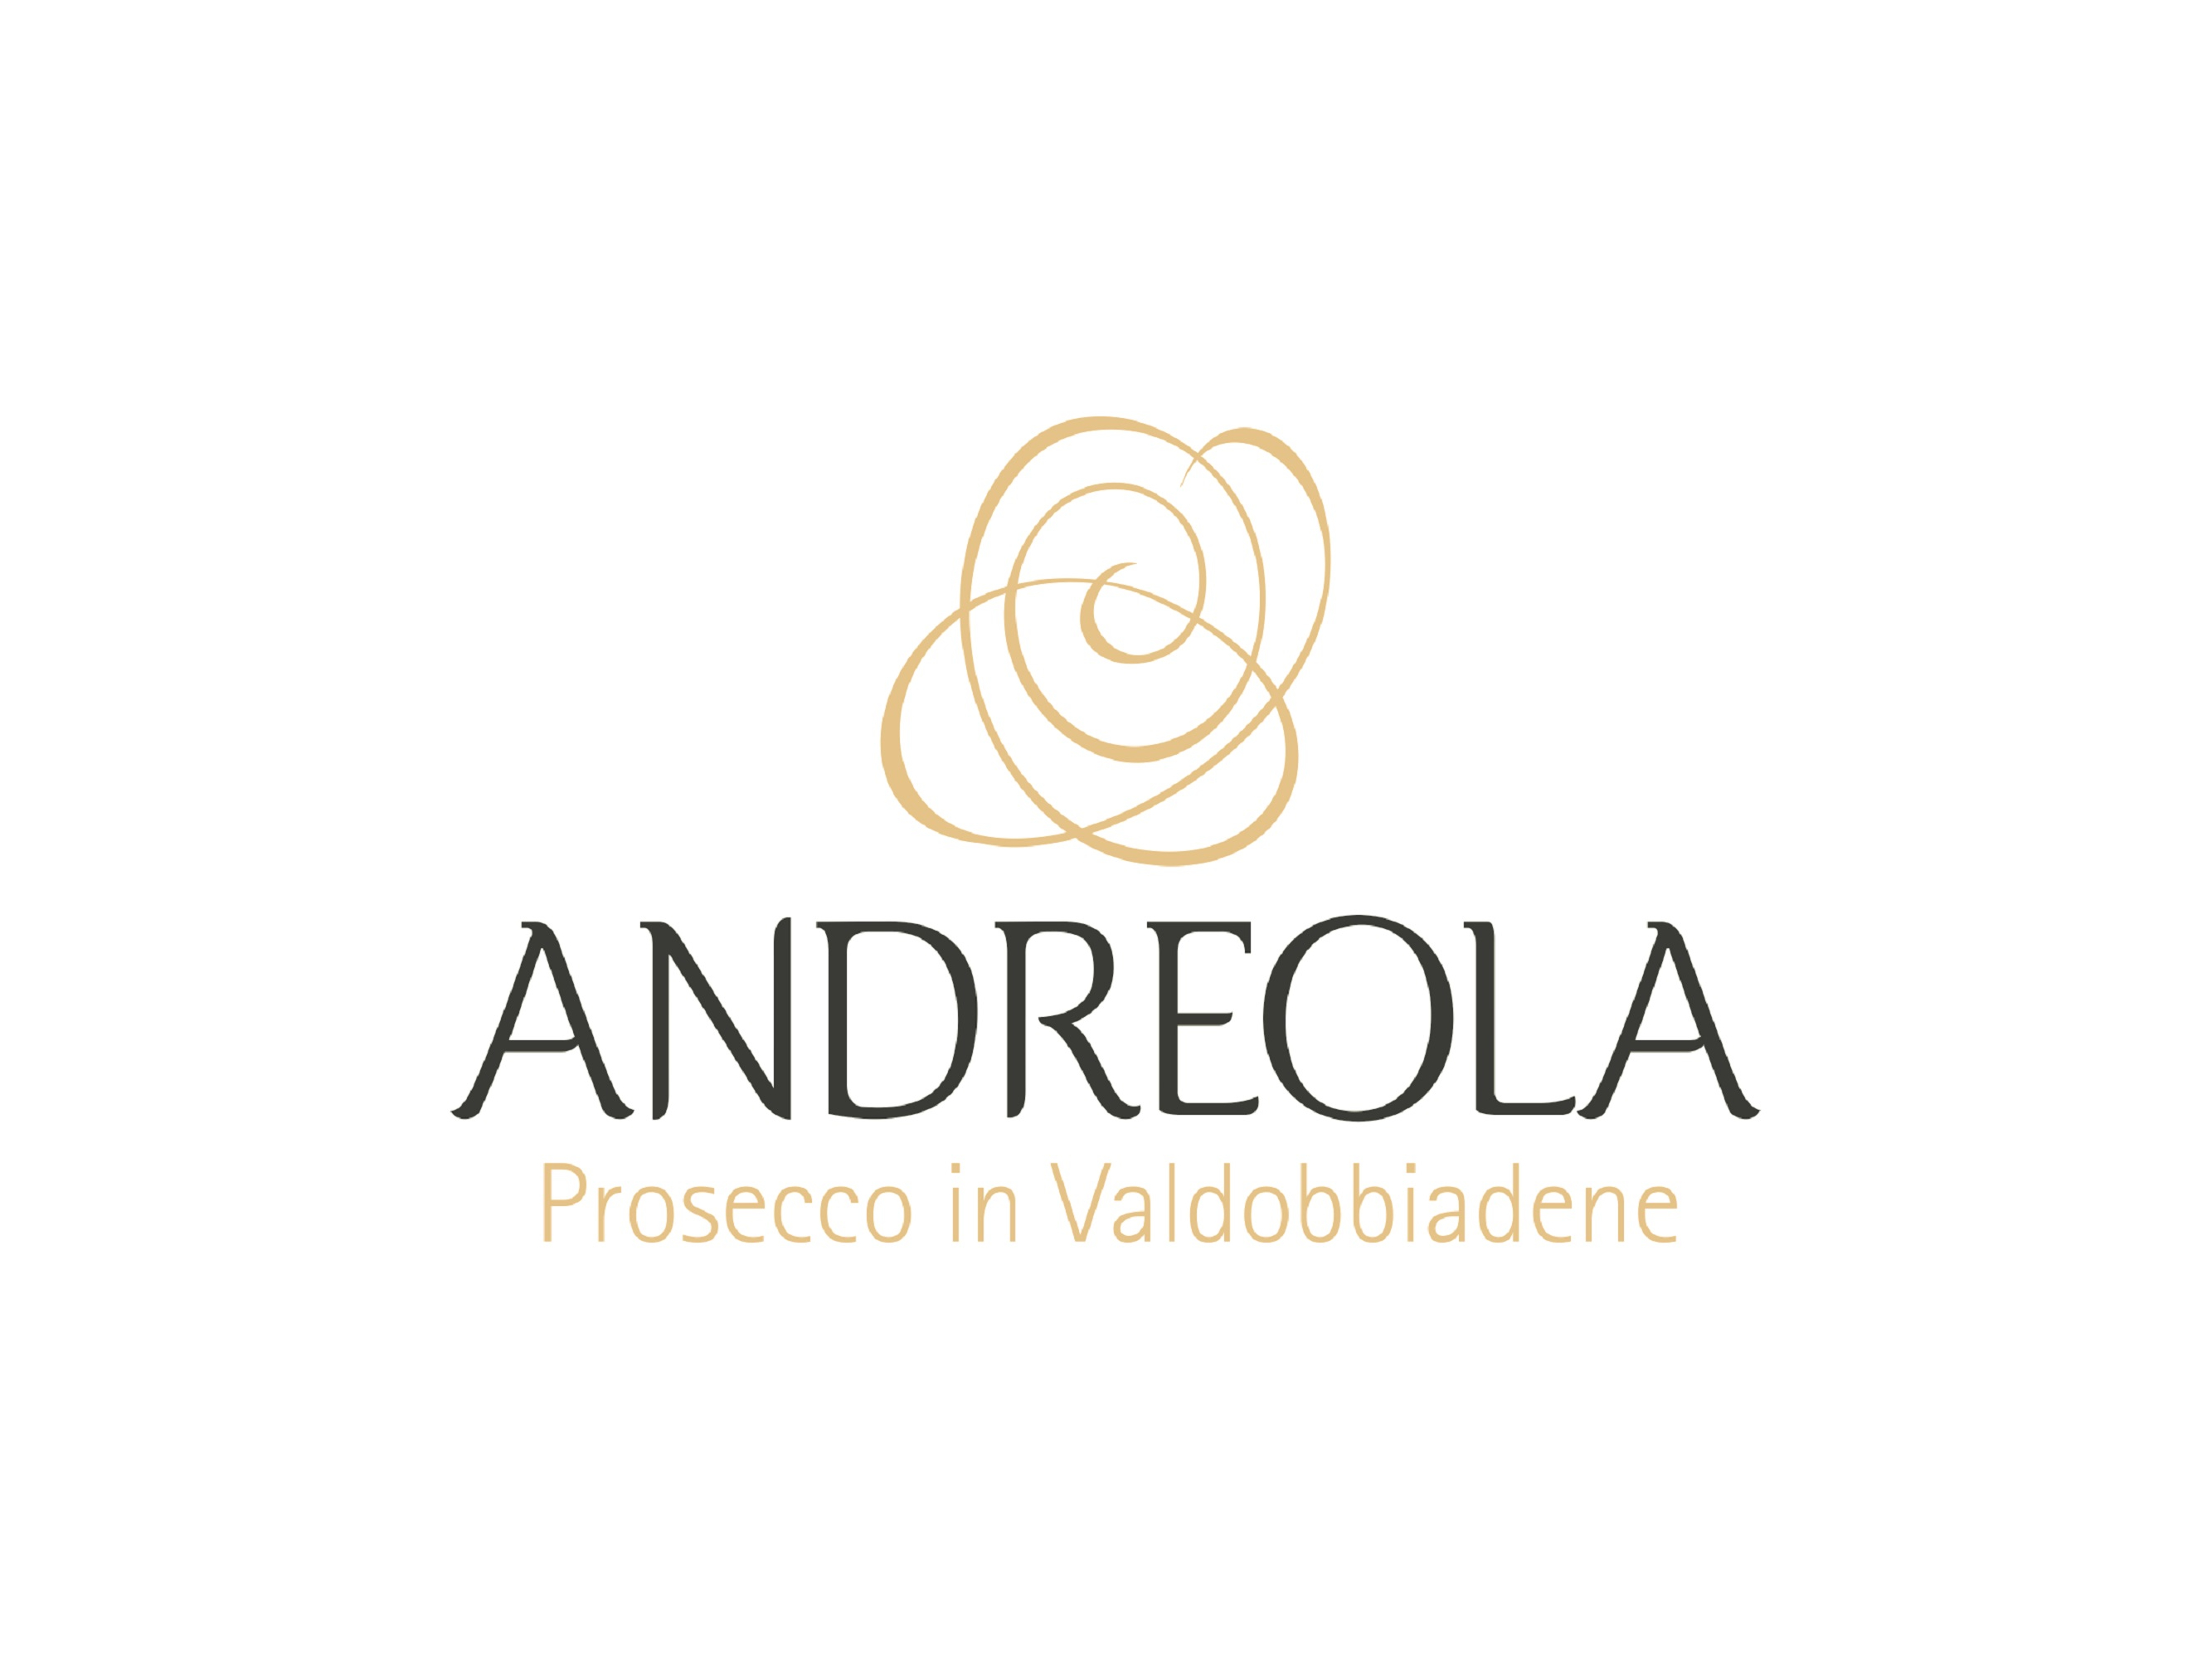 Andreola Prosecco